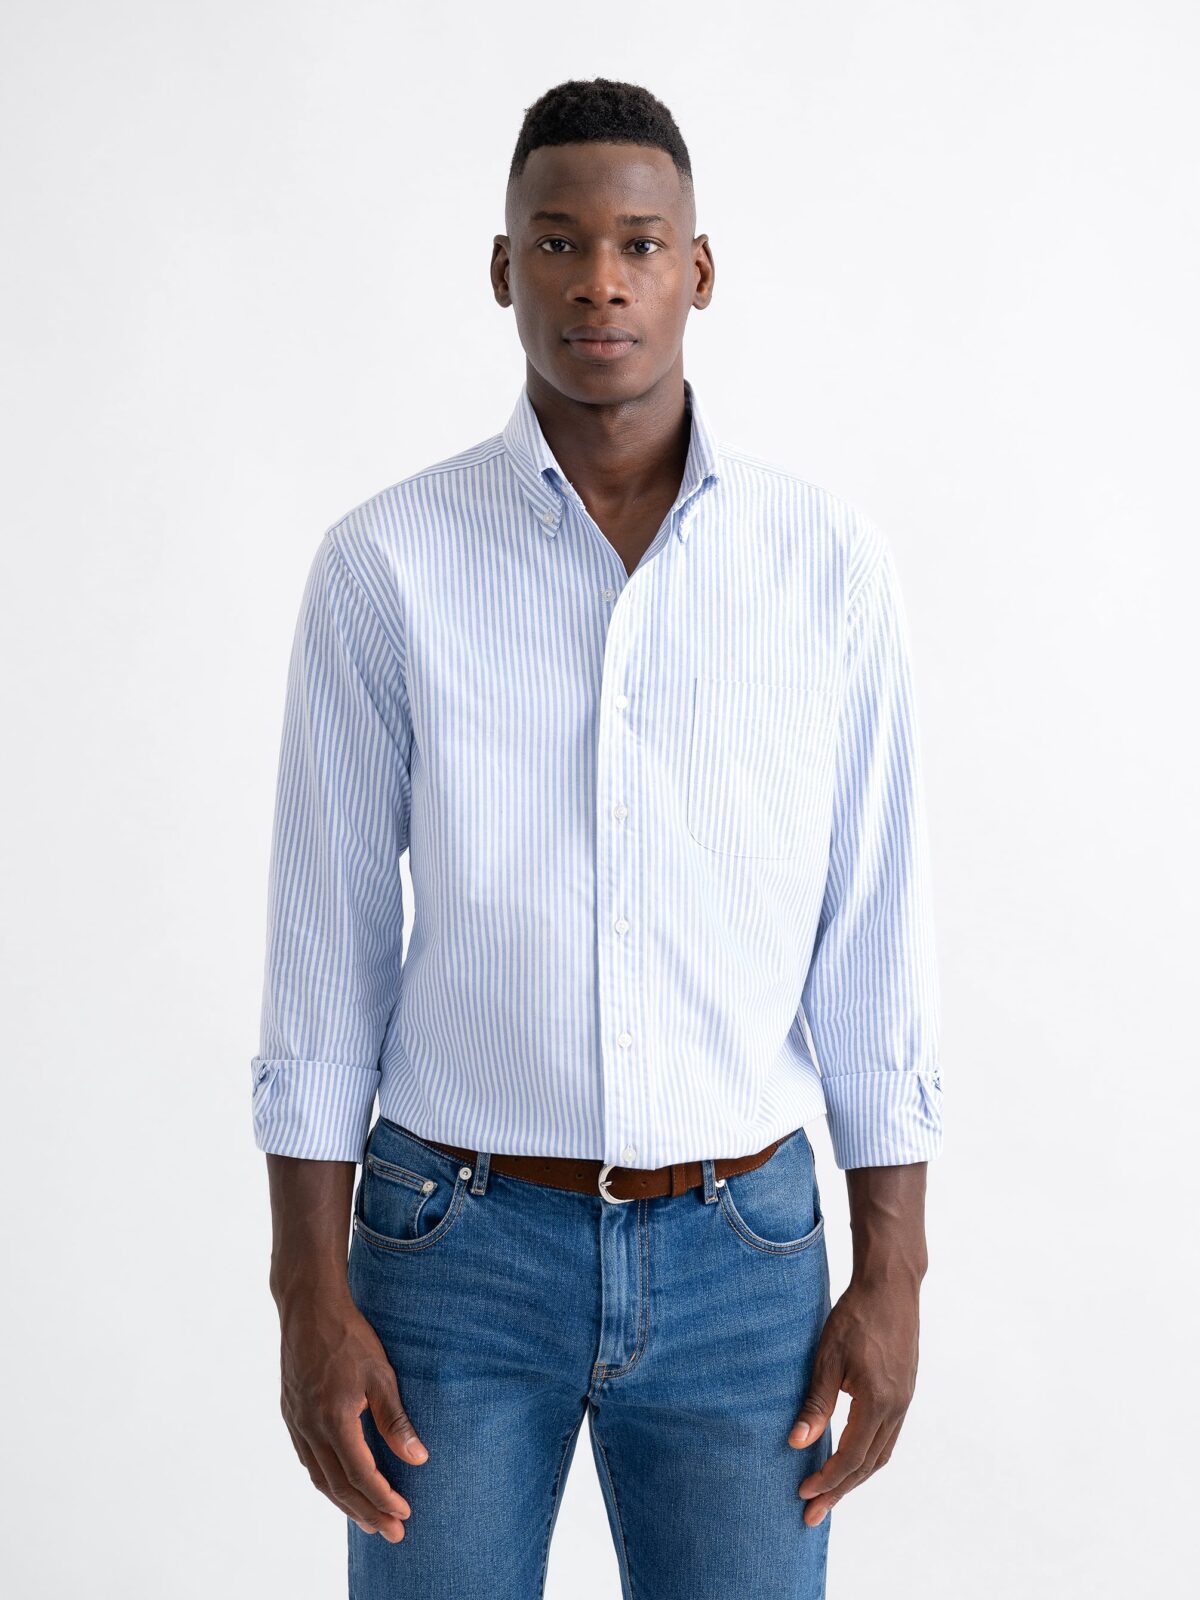 Blue University Stripe Oxford Cloth Shirt by Proper Cloth